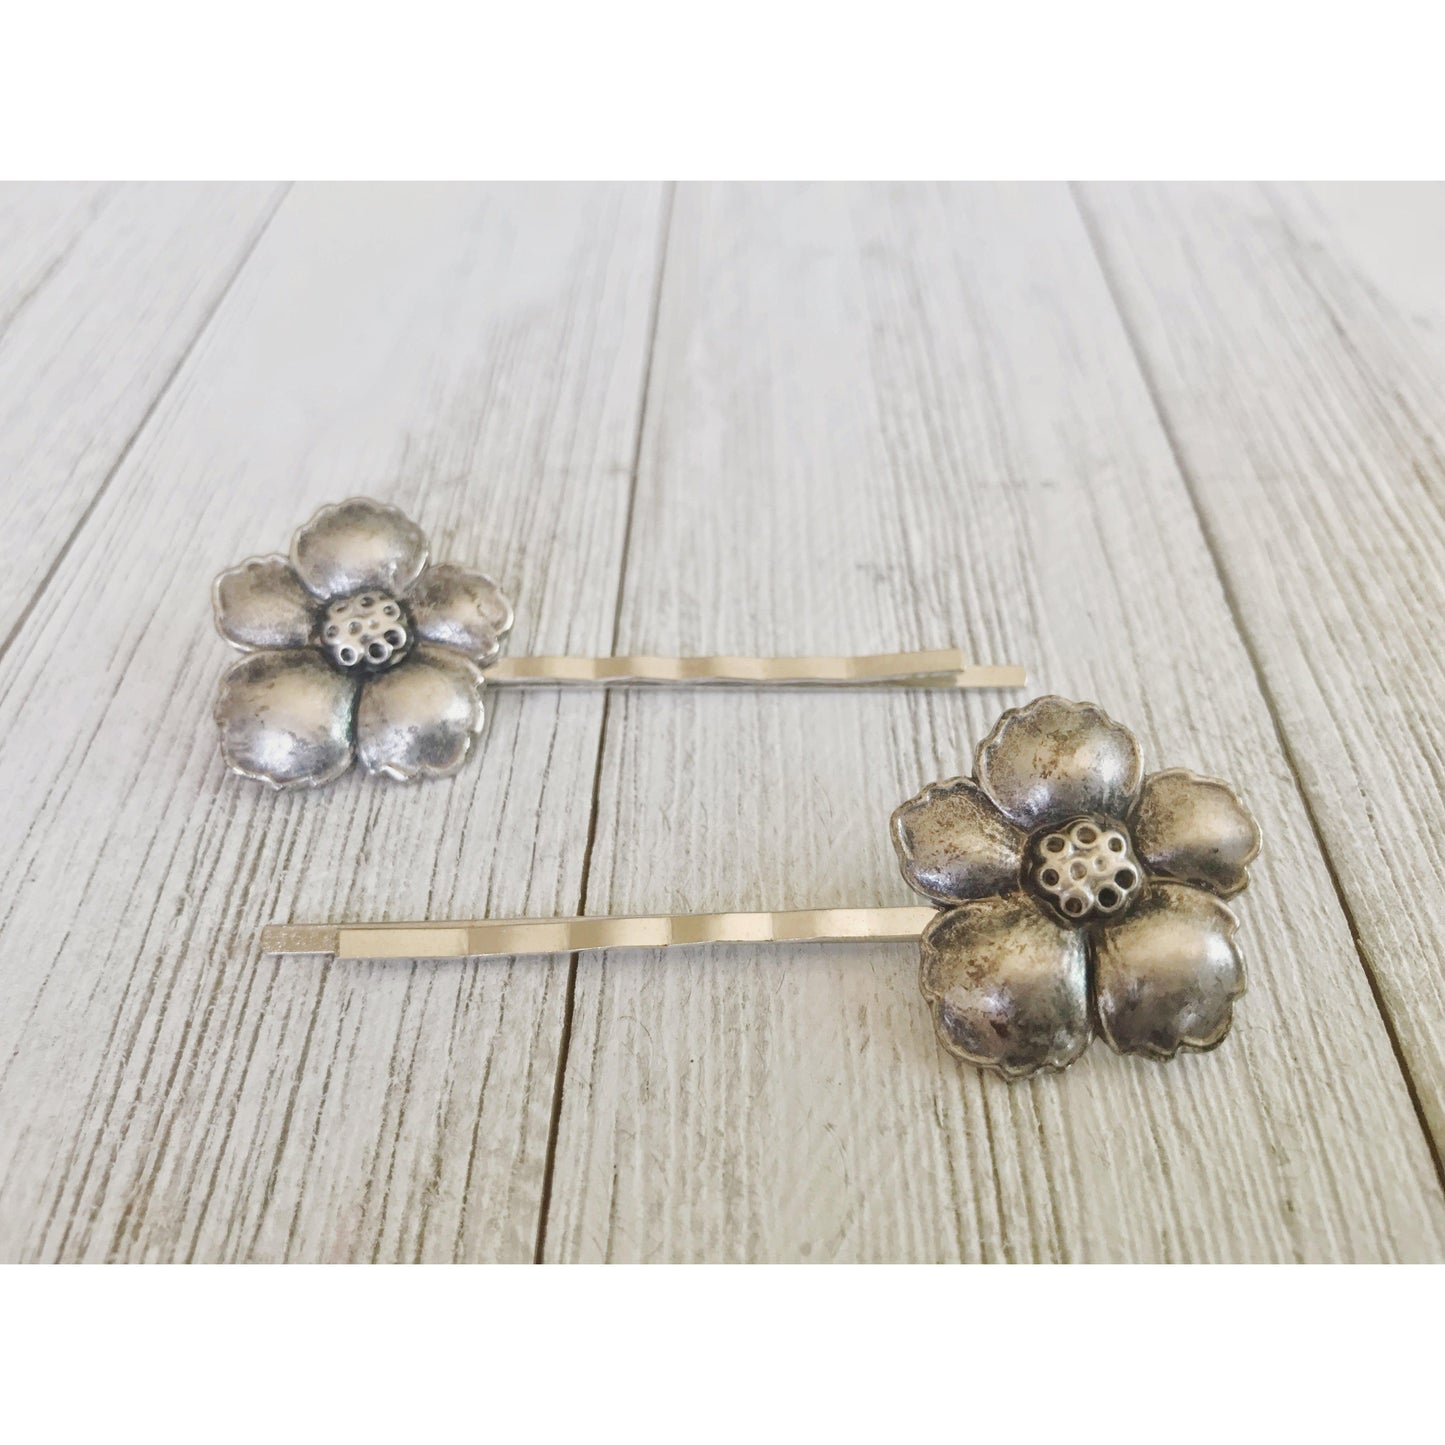 Antiqued Silver Wildflower Hair Pins - Delicate & Elegant Hair Accessories